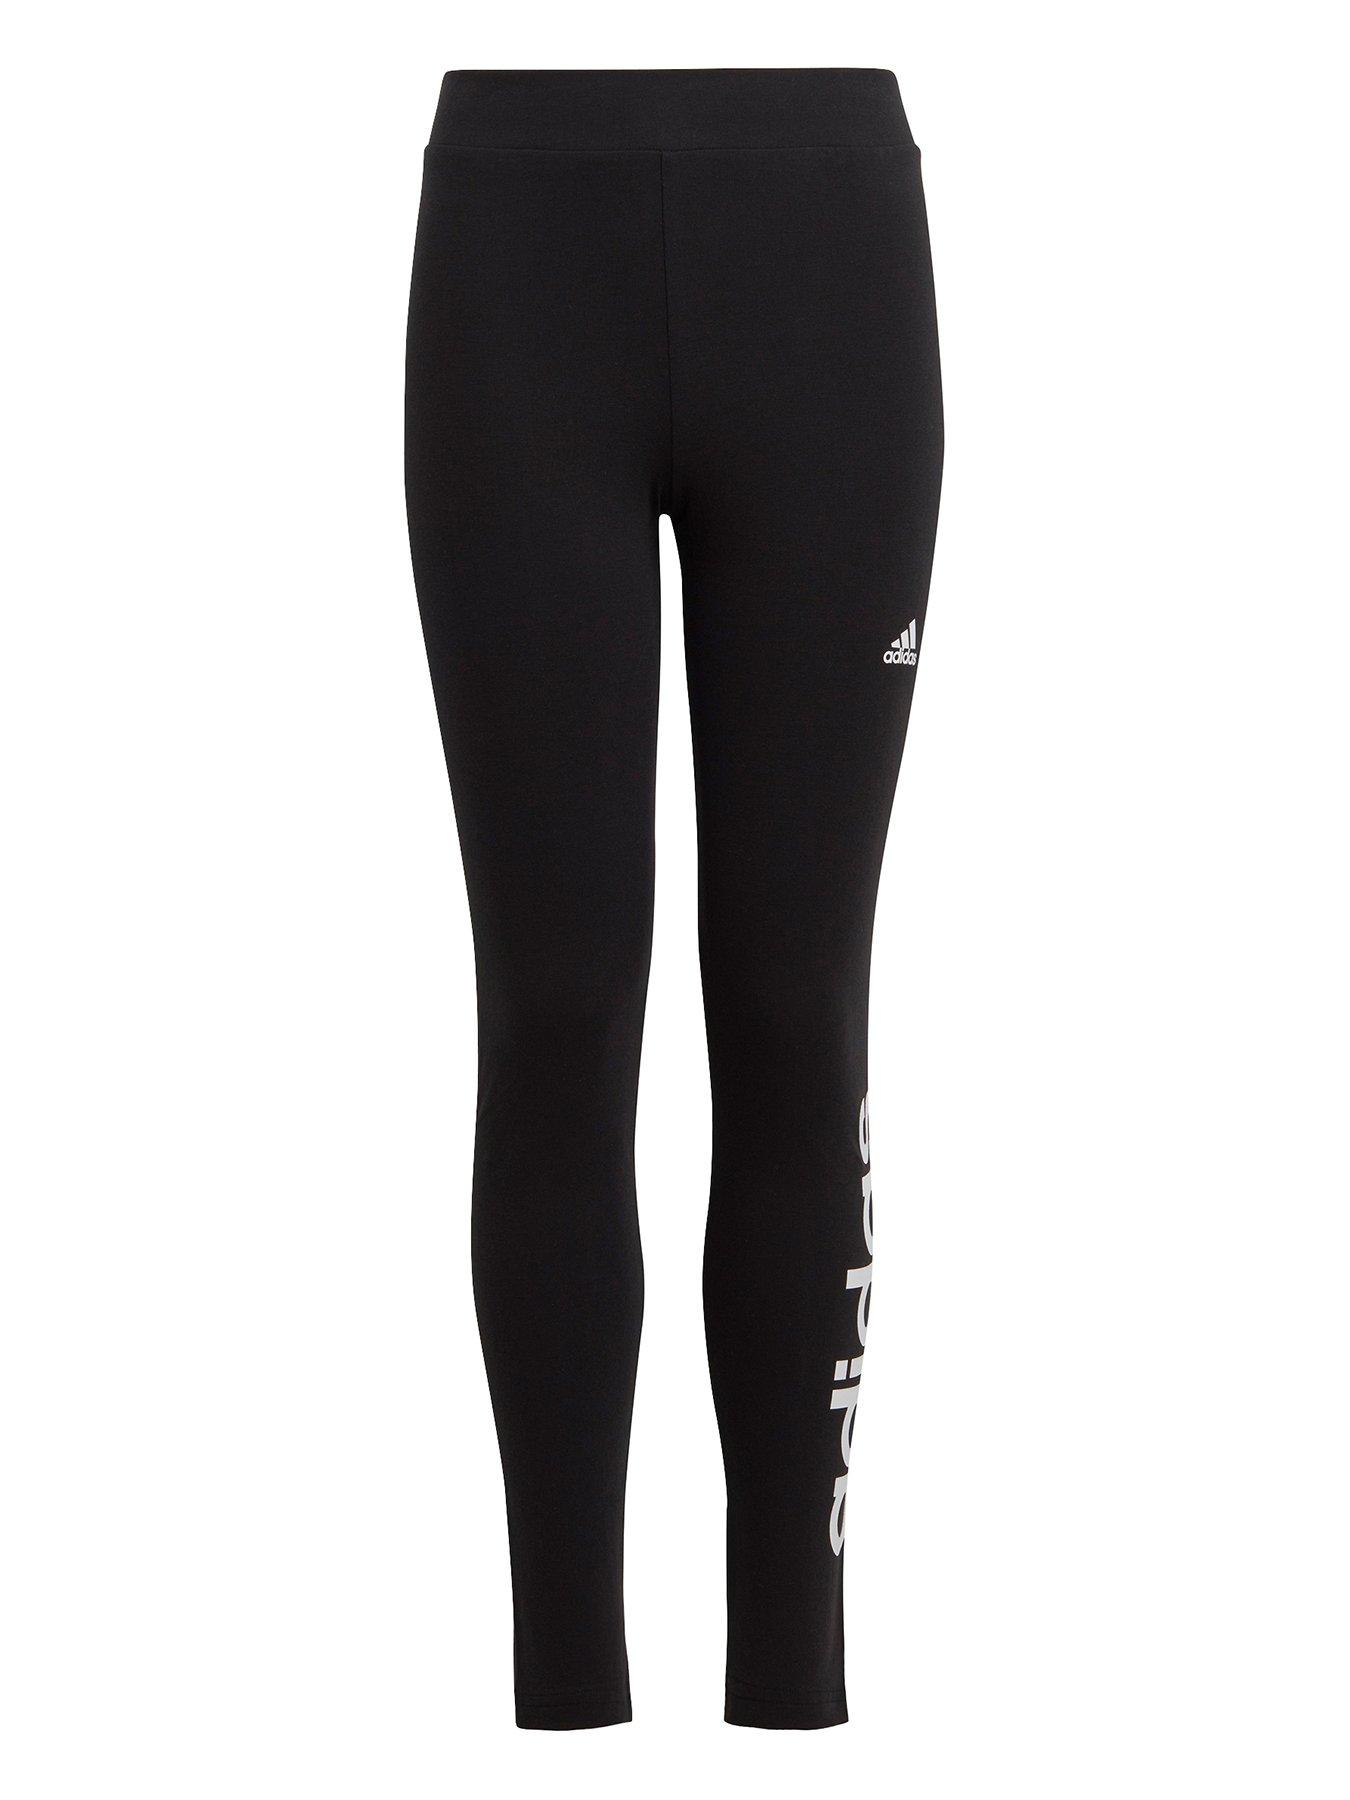 Adidas Big Girls Black Sweatpants Size XL(15-16) 3 Stripes Mash Lining